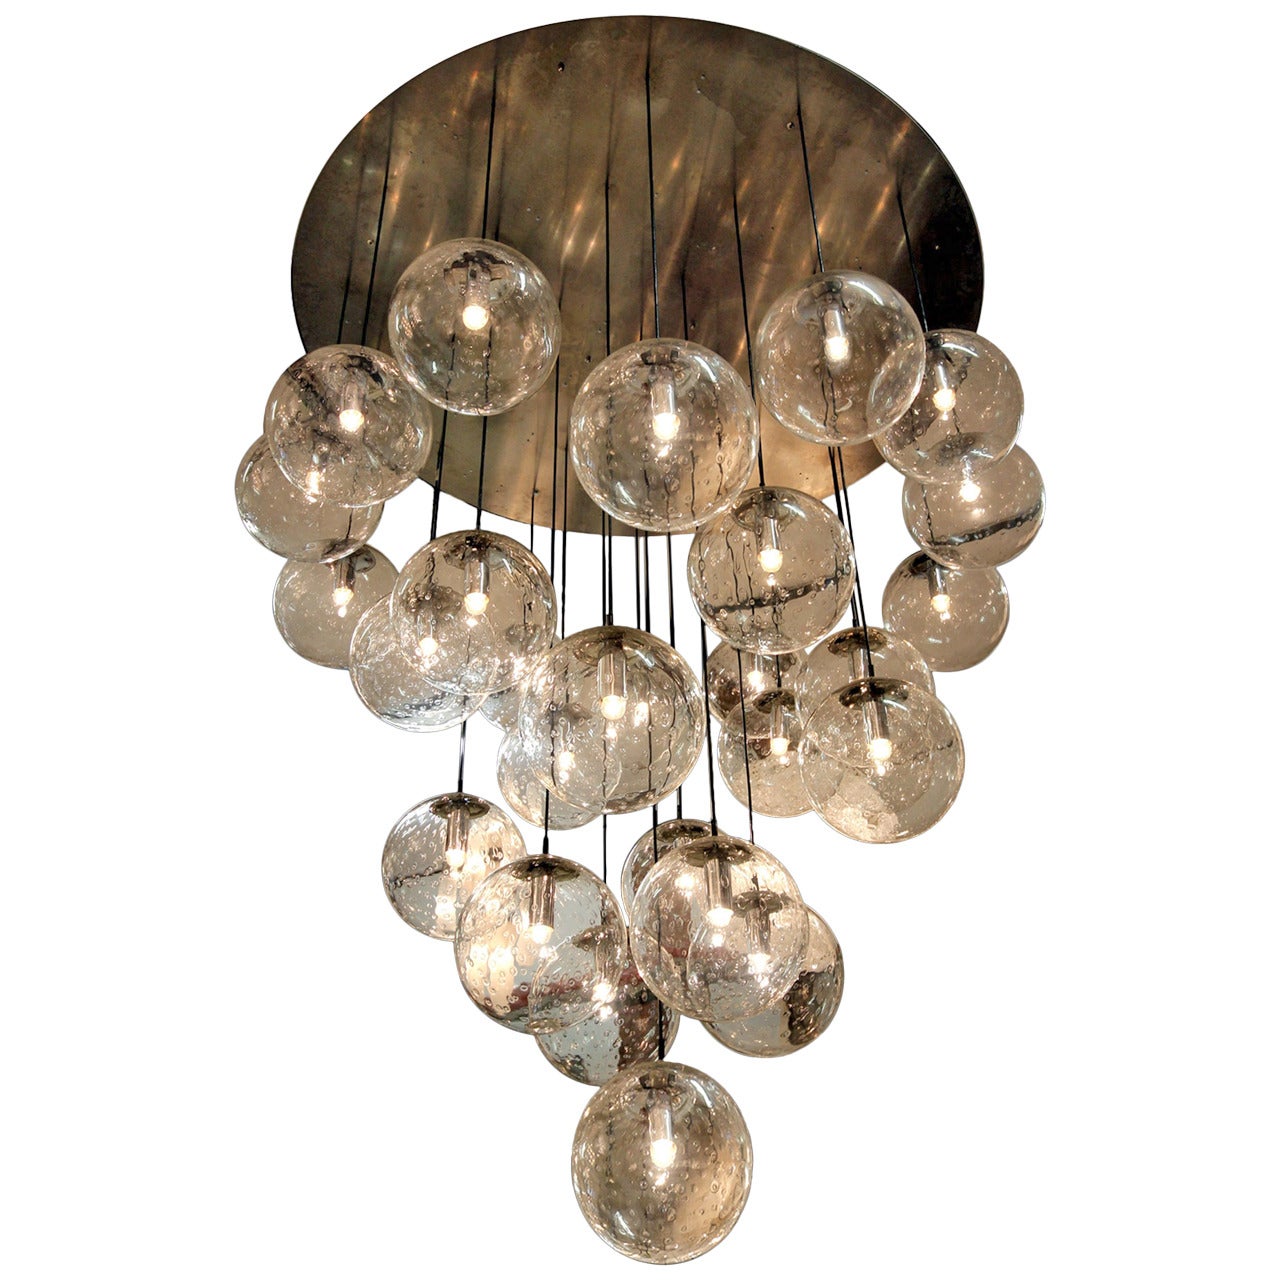 Amaizing 1970's huge glass balls chandelier by Raak Amsterdam